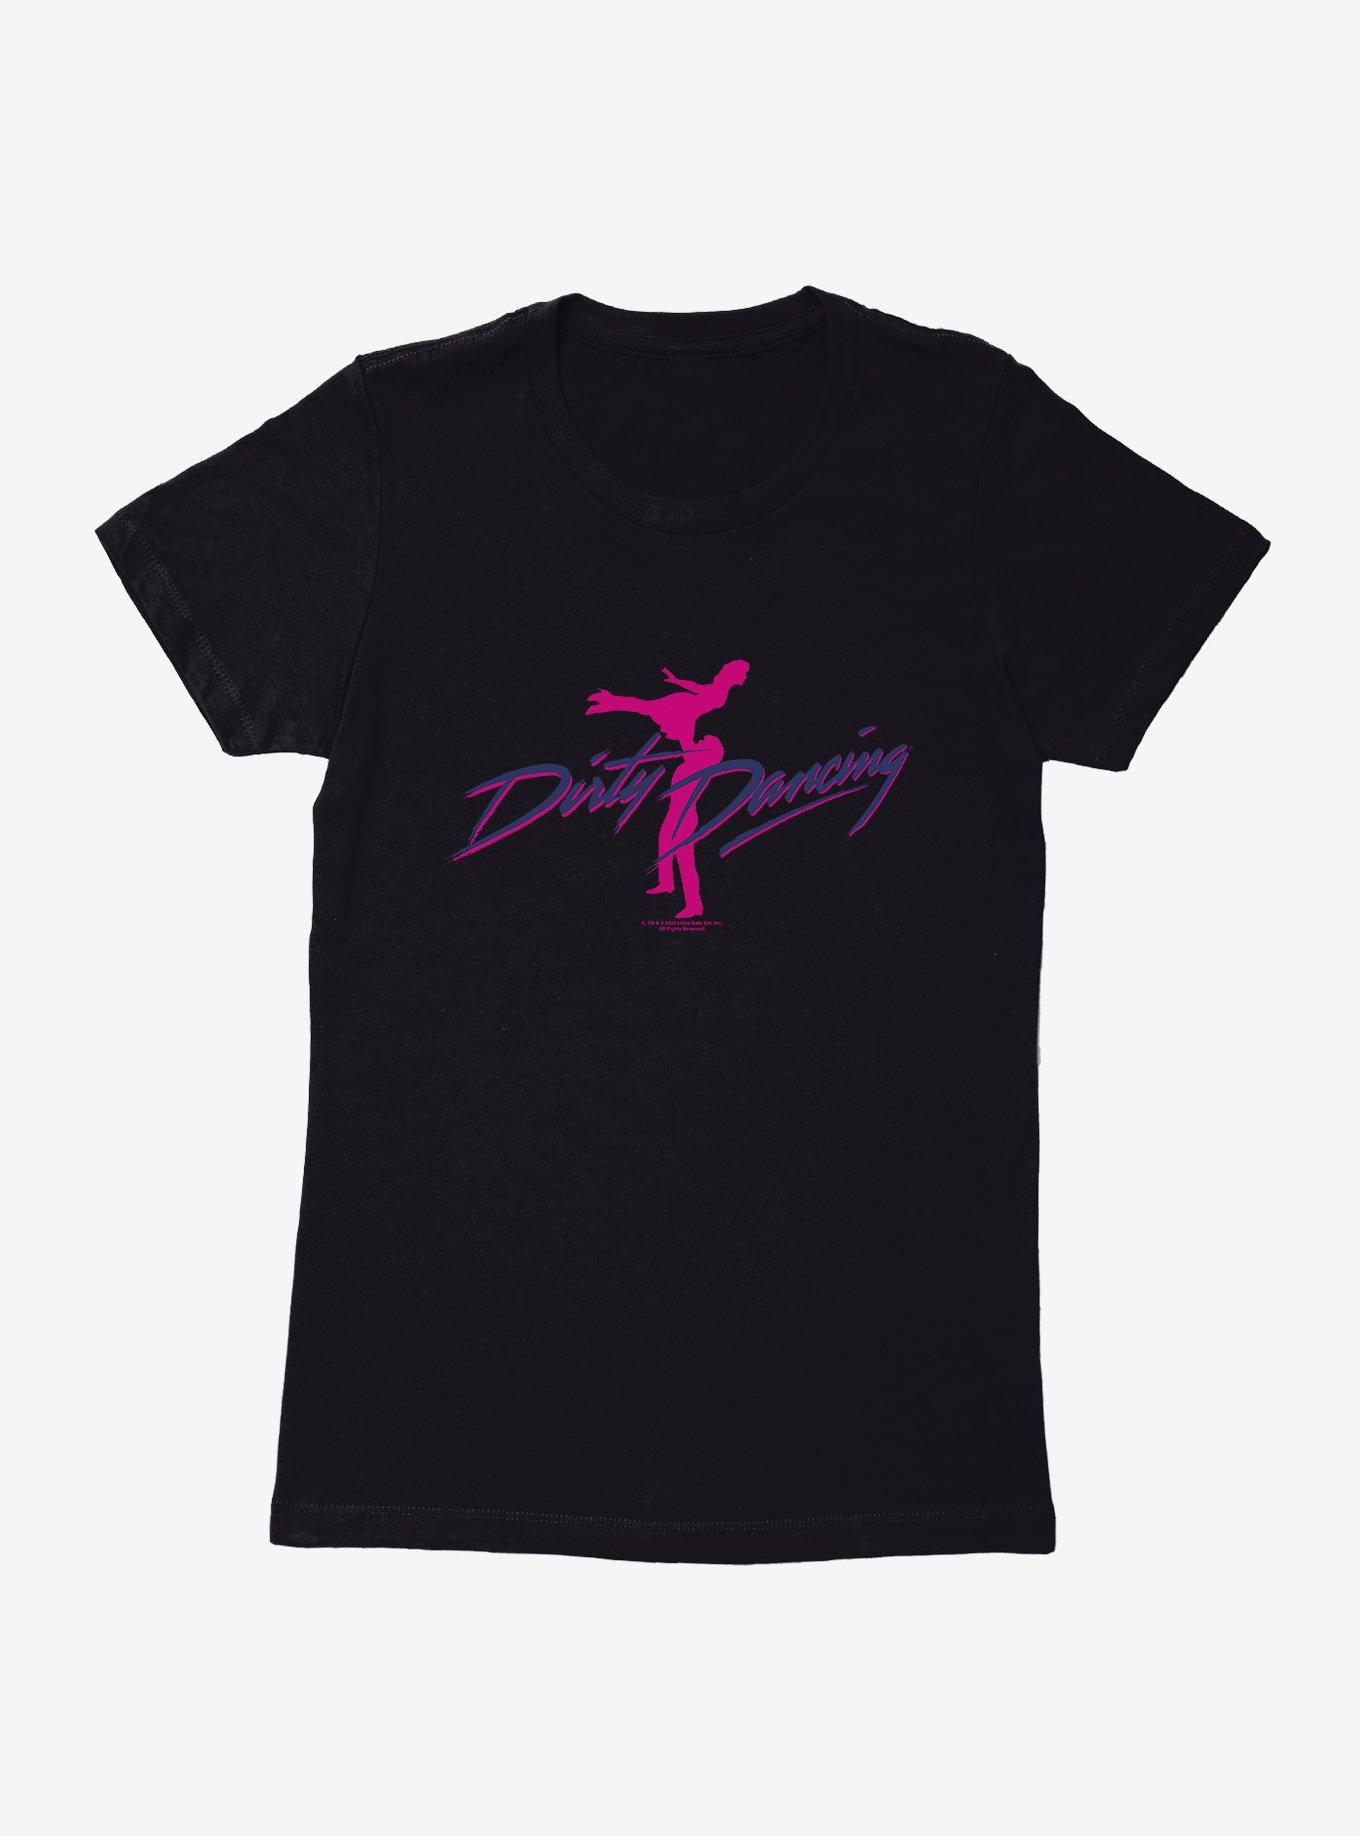 Dirty Dancing Lift Silohouette Womens T-Shirt, , hi-res